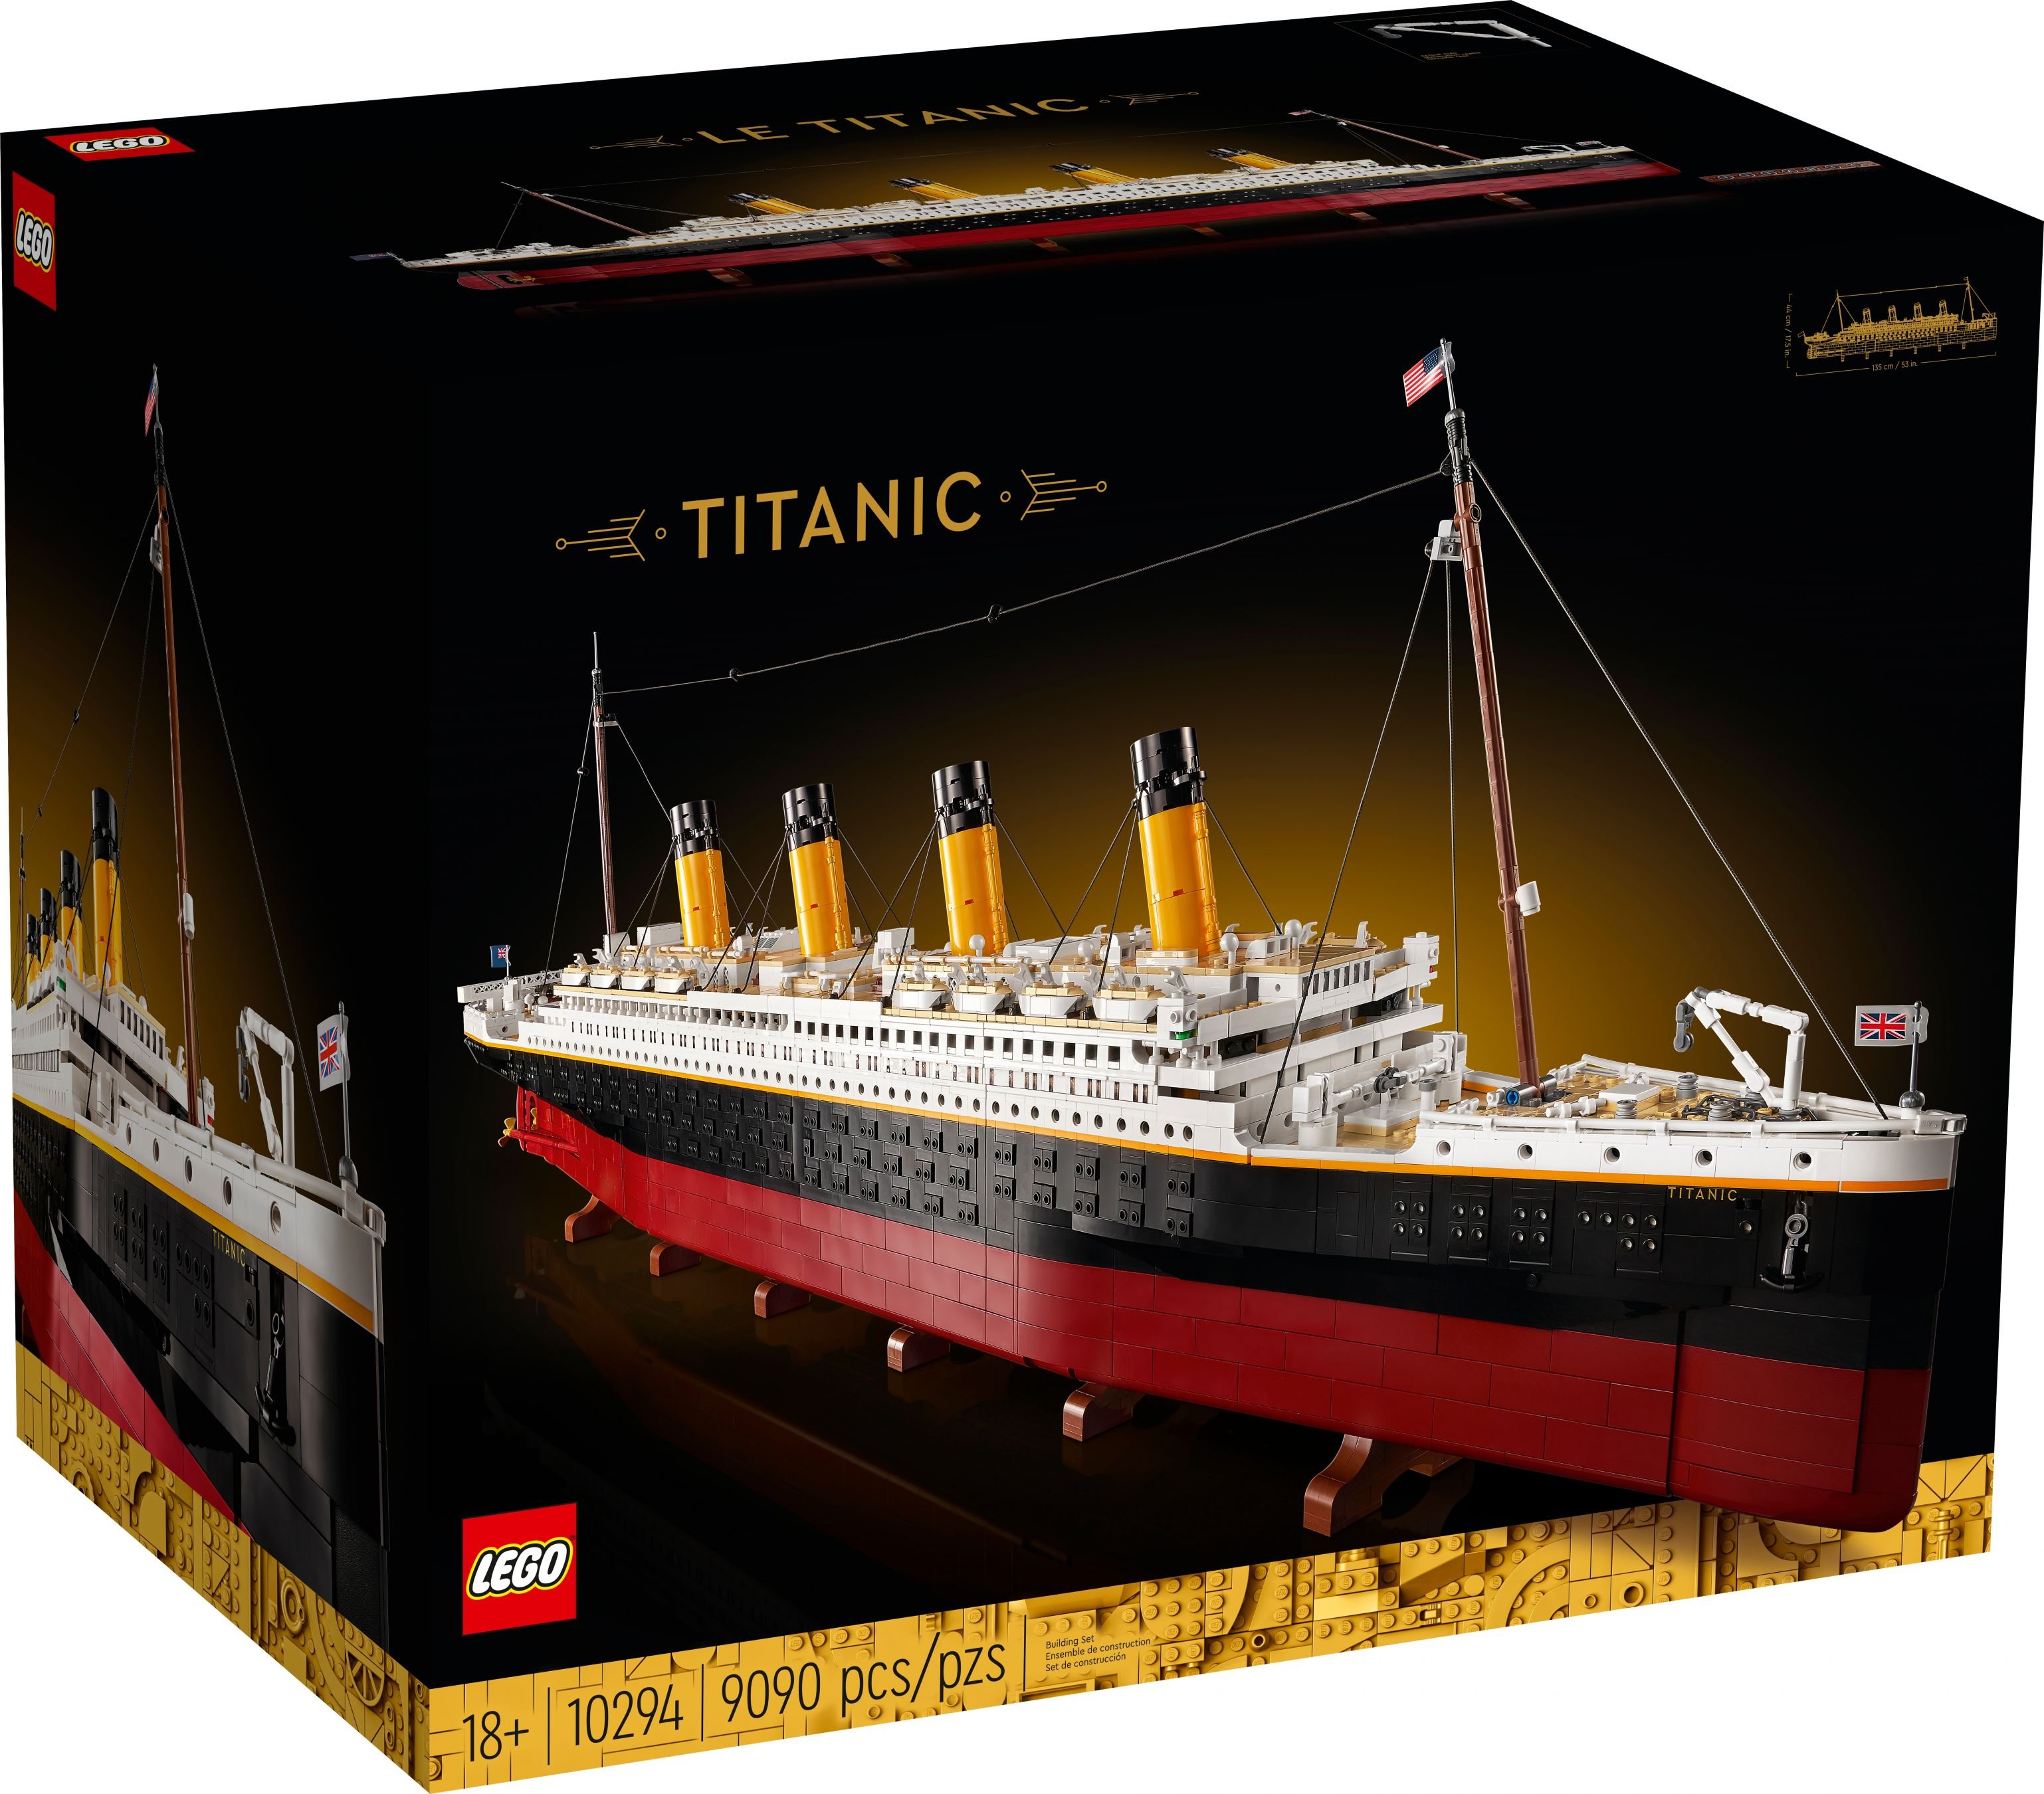 LEGO Advanced Models 10294 LEGO® Titanic LEGO_10294_alt1.jpg